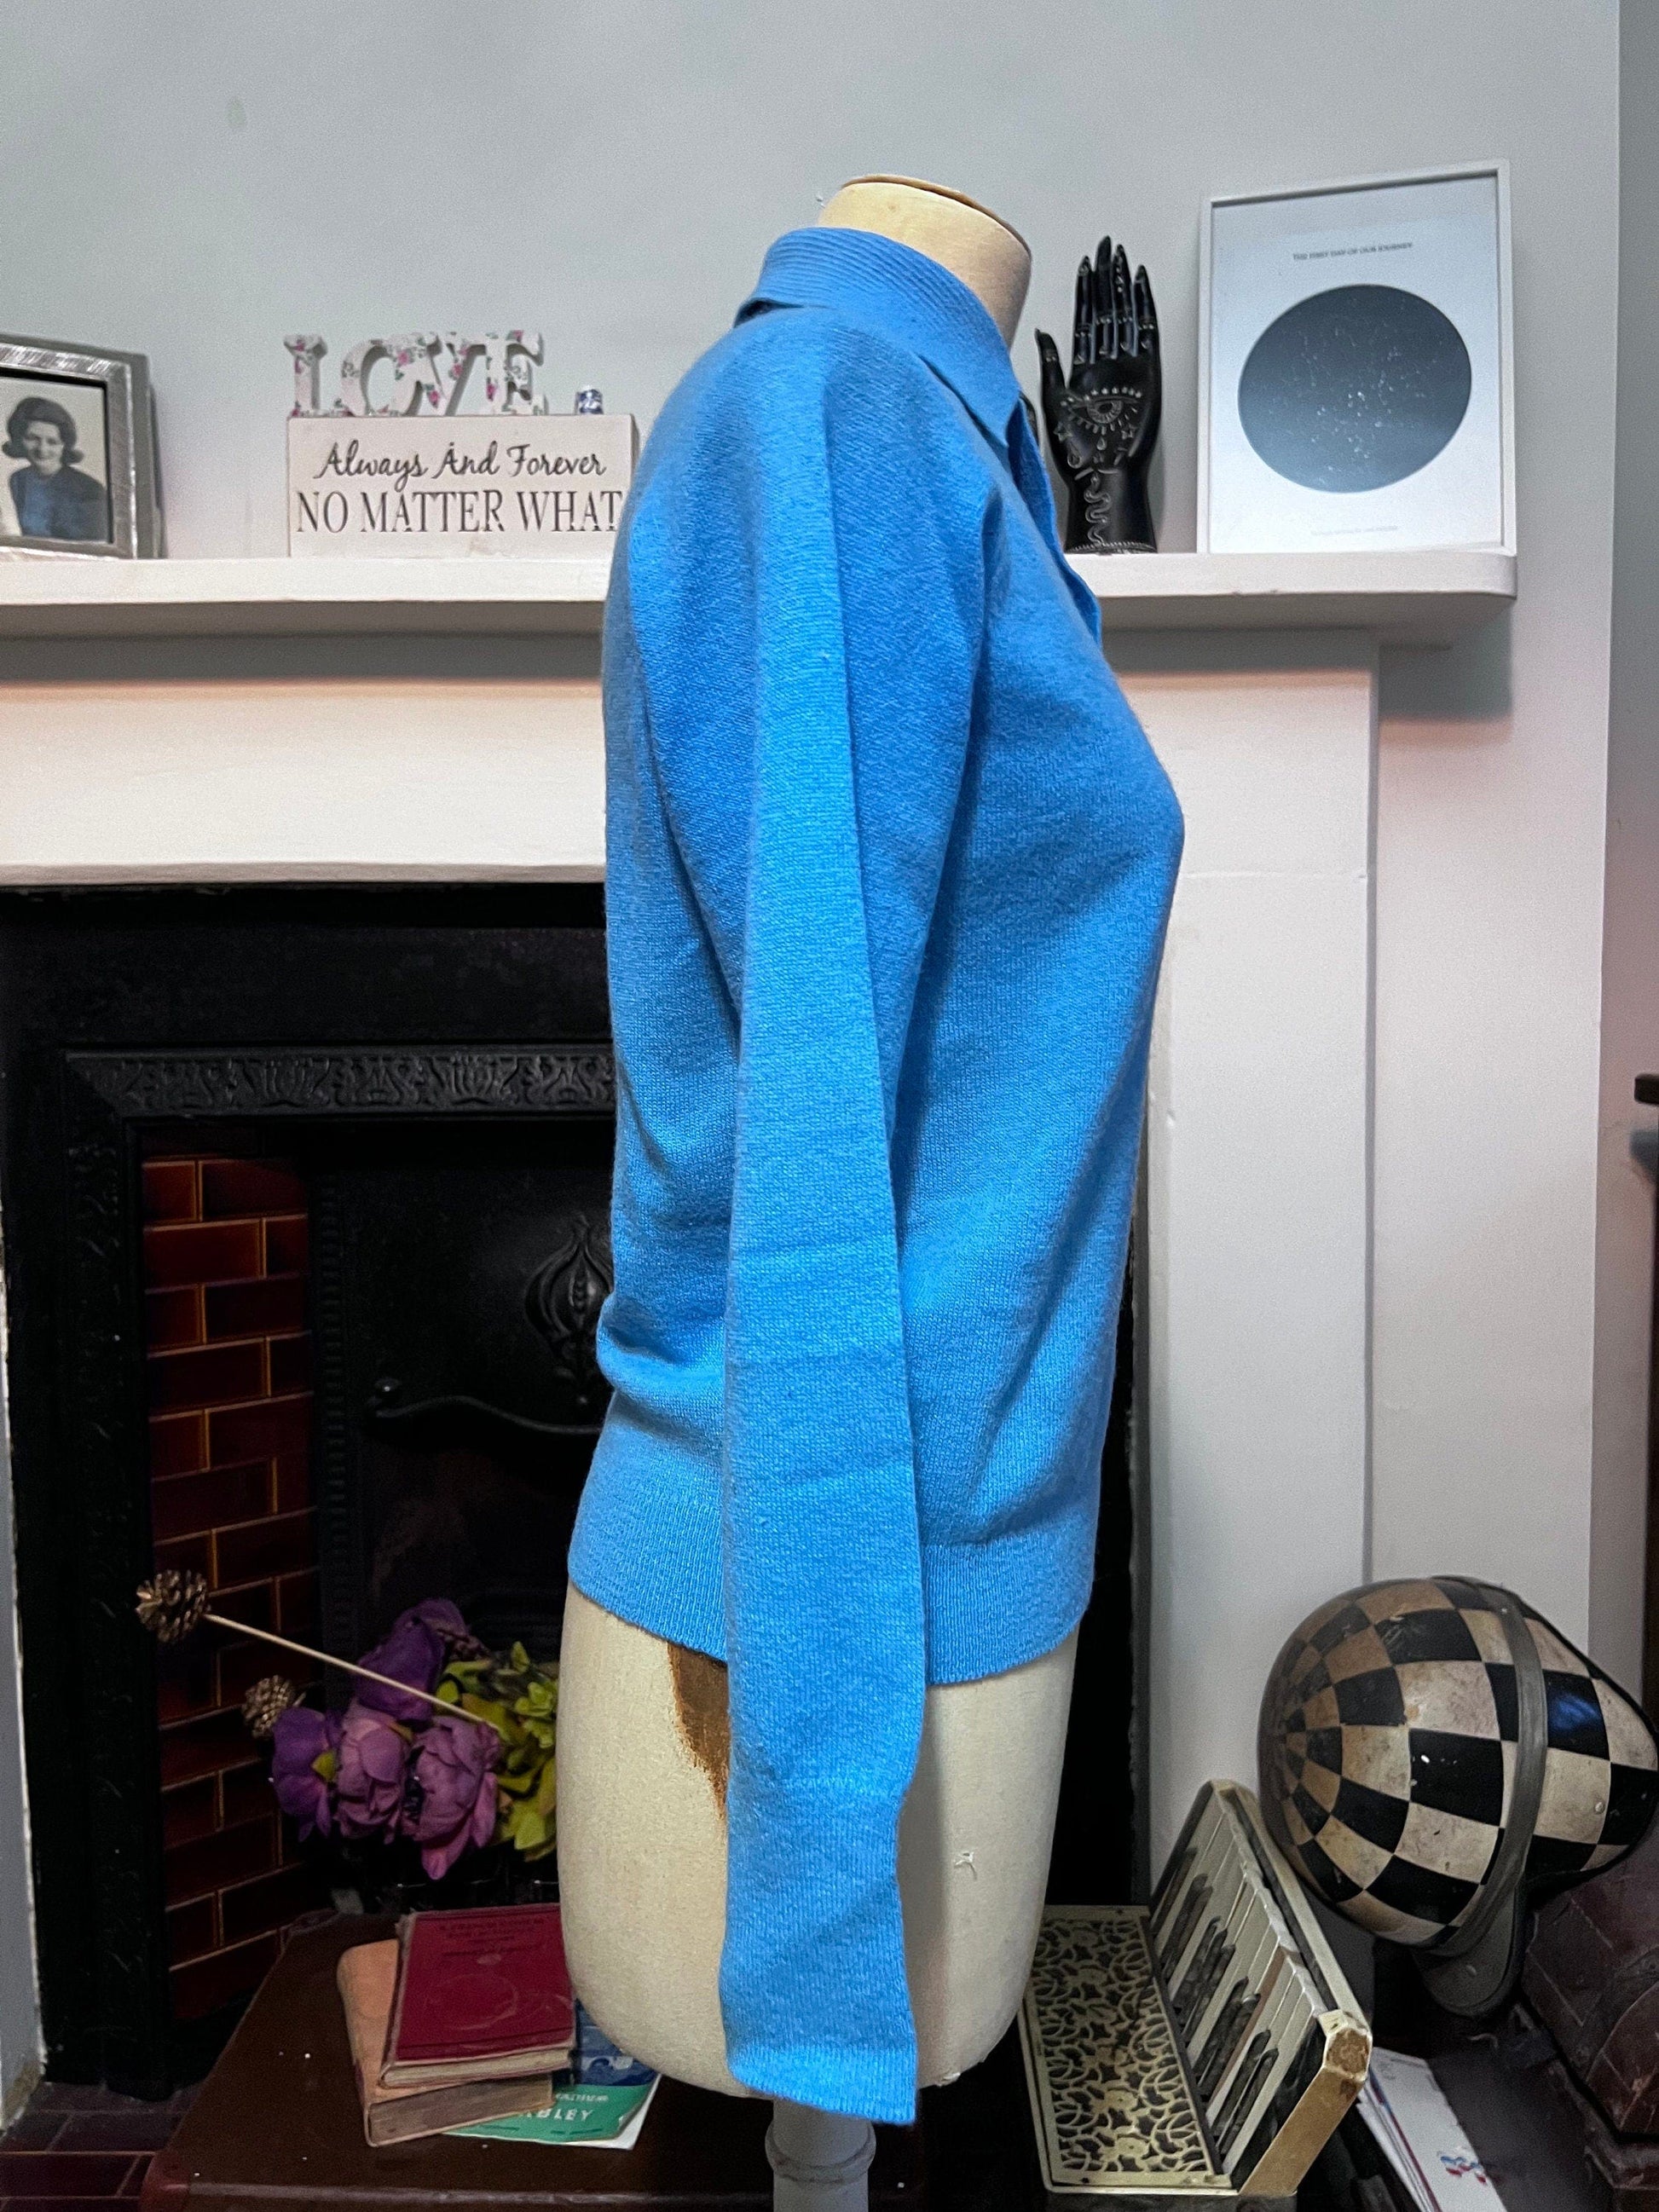 Vintage blue jumper lambswool jumper powder blue jumper, blue vintage knitwear, vintage pullover, vintage jumper, 1950s, vintage knitwear